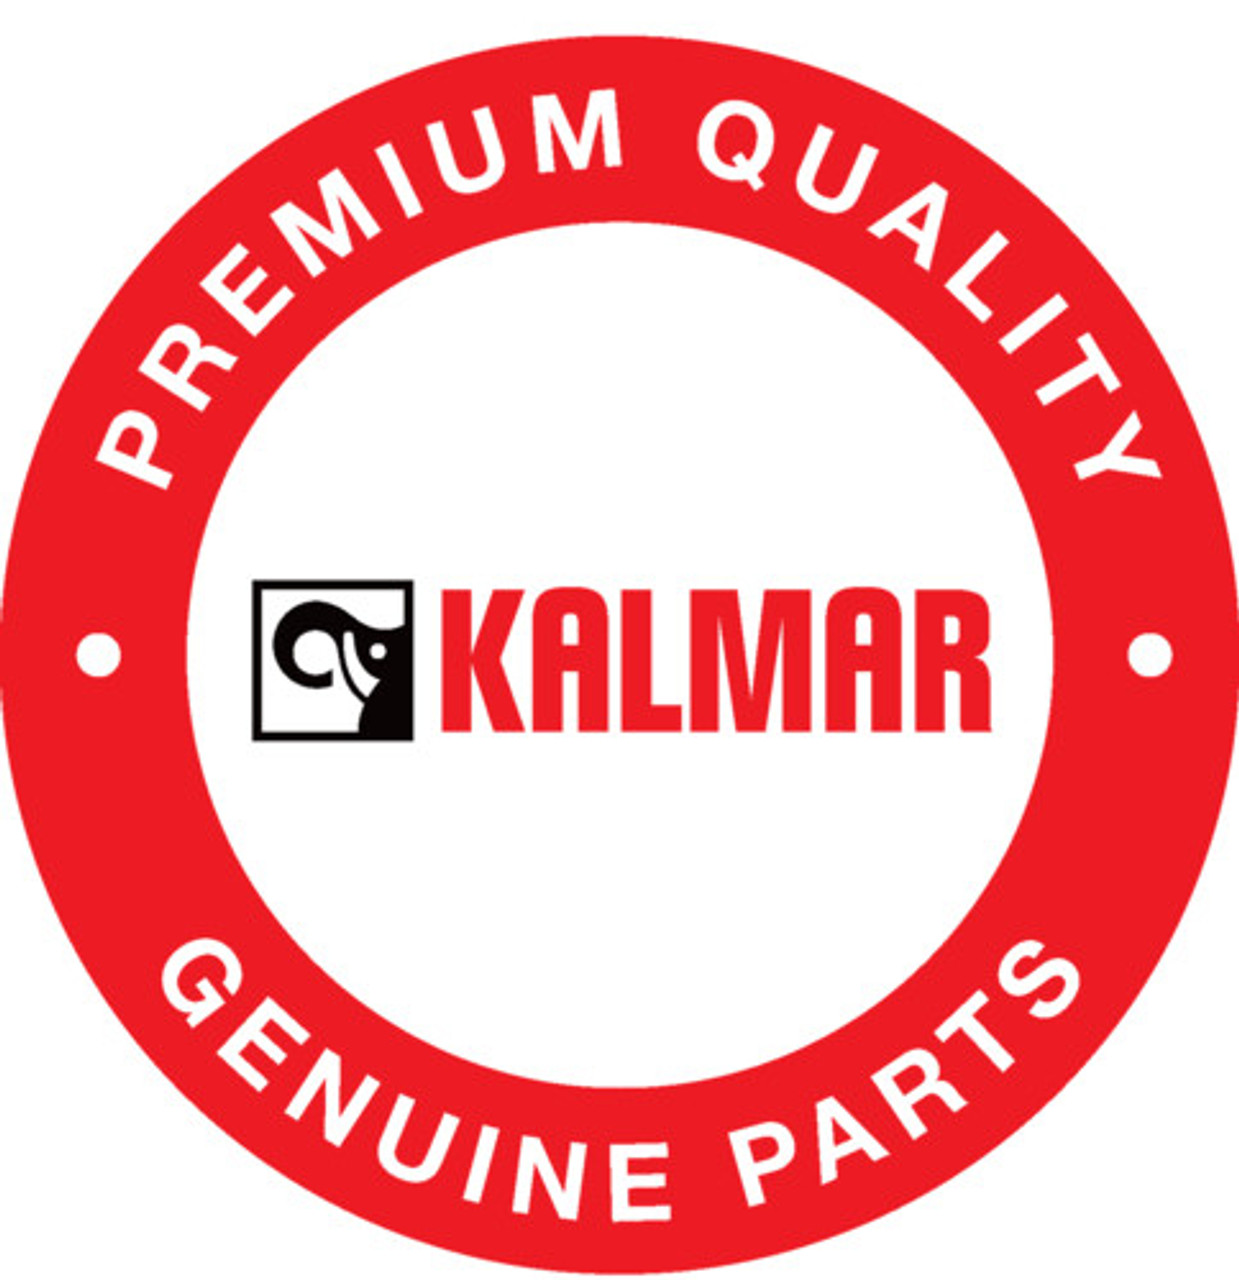 A27823.0100: Kalmar® Pressure Chamber